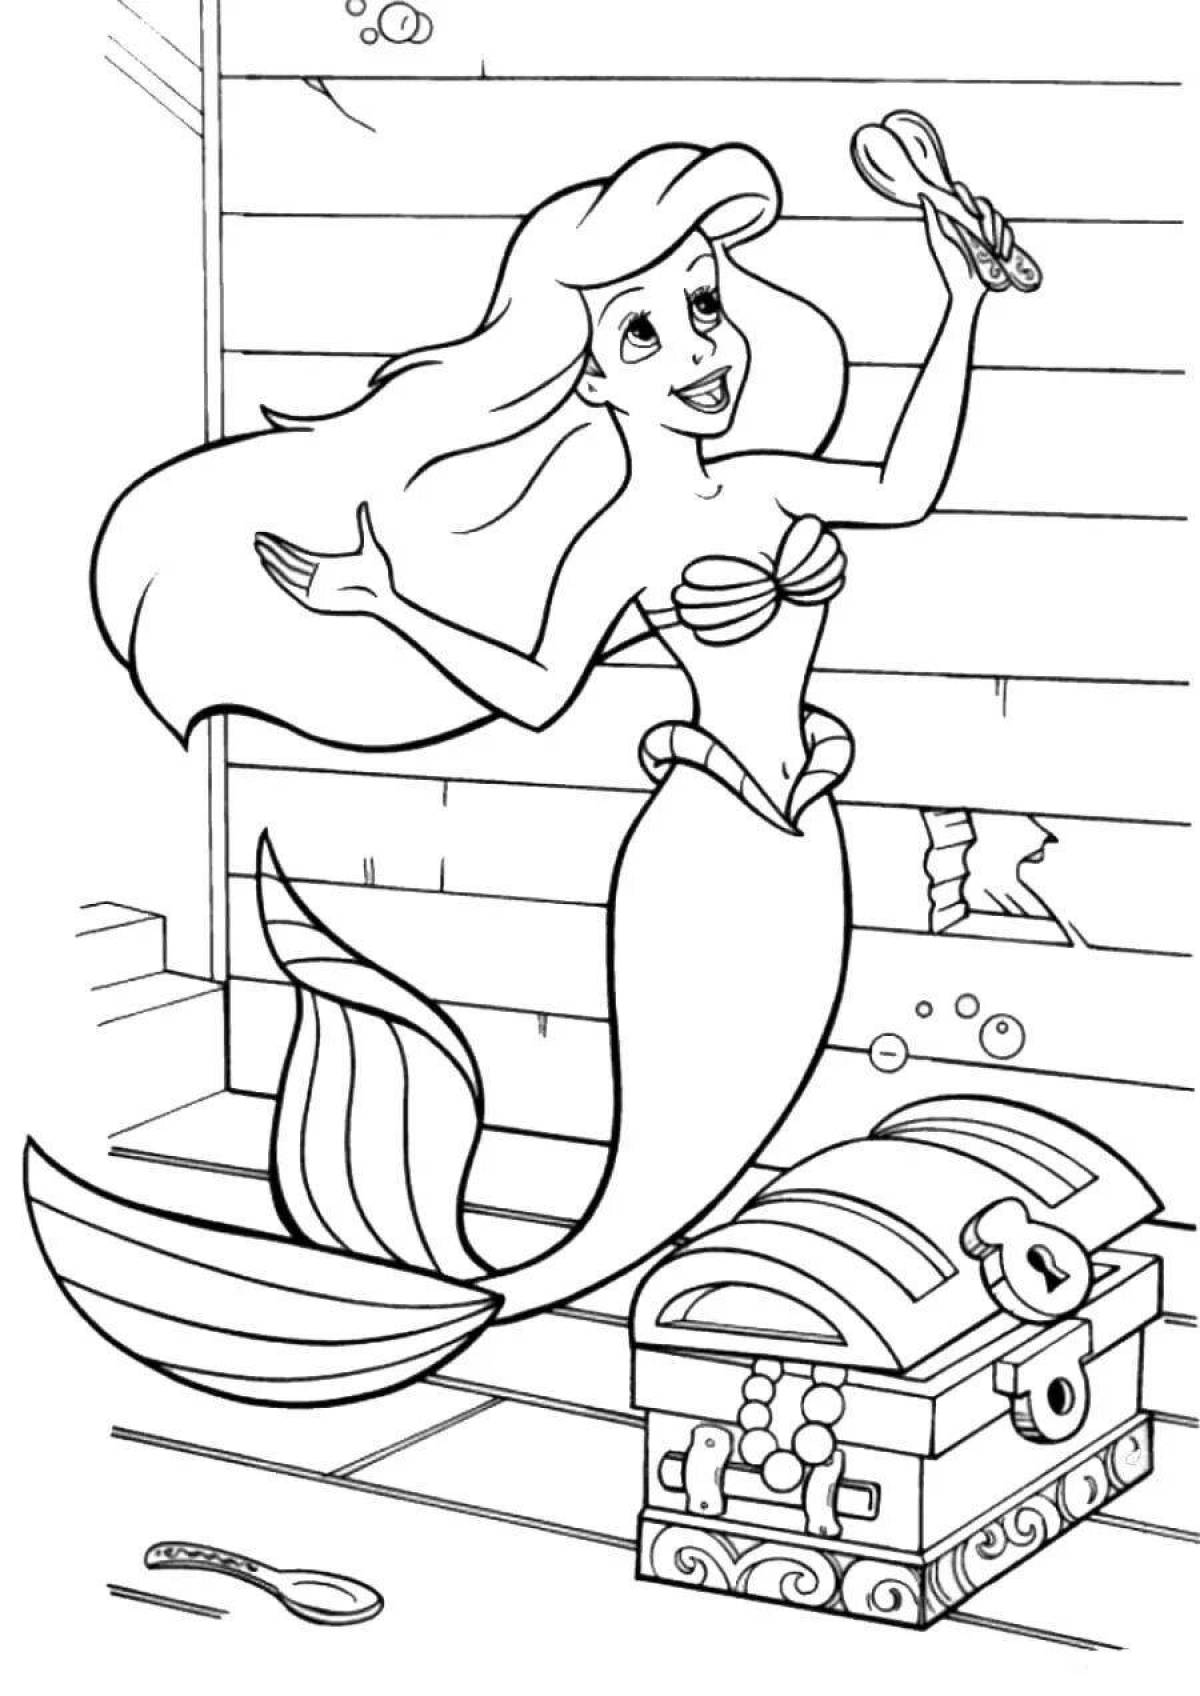 Princess ariel's charming coloring mermaid